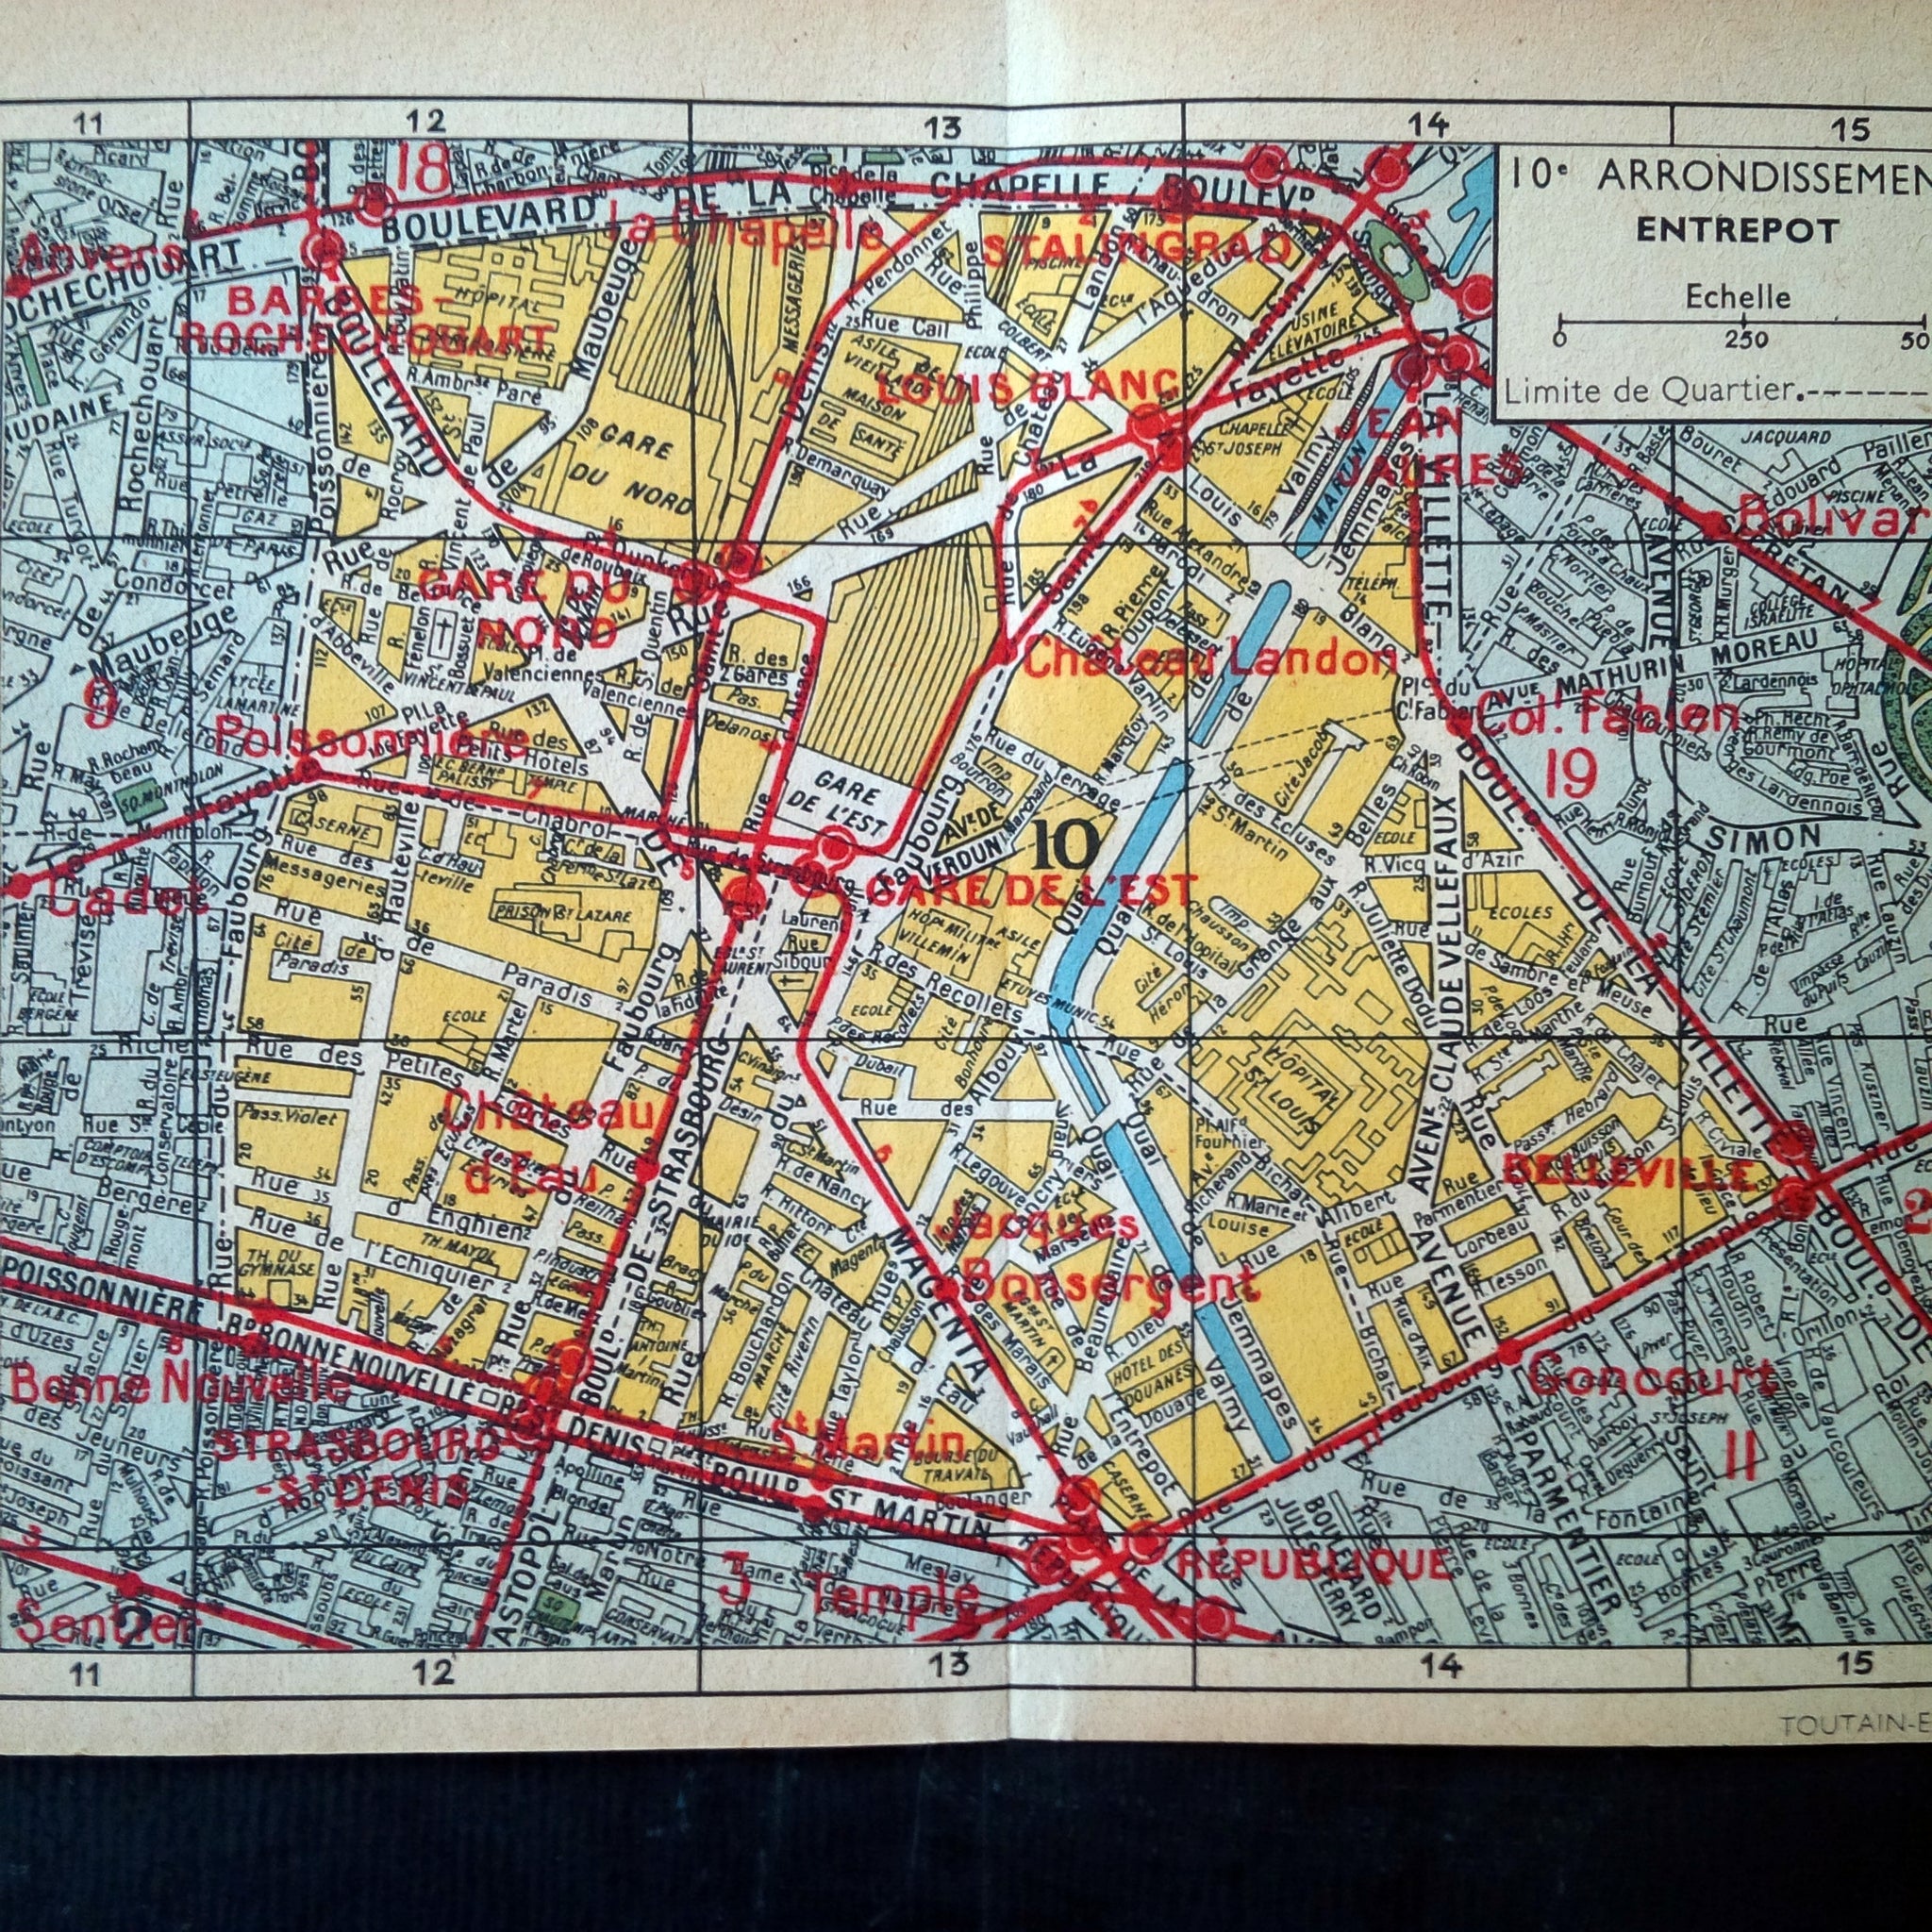 Antique Street Maps of Paris with Metro Stops - Toutain Editeur - Four Available